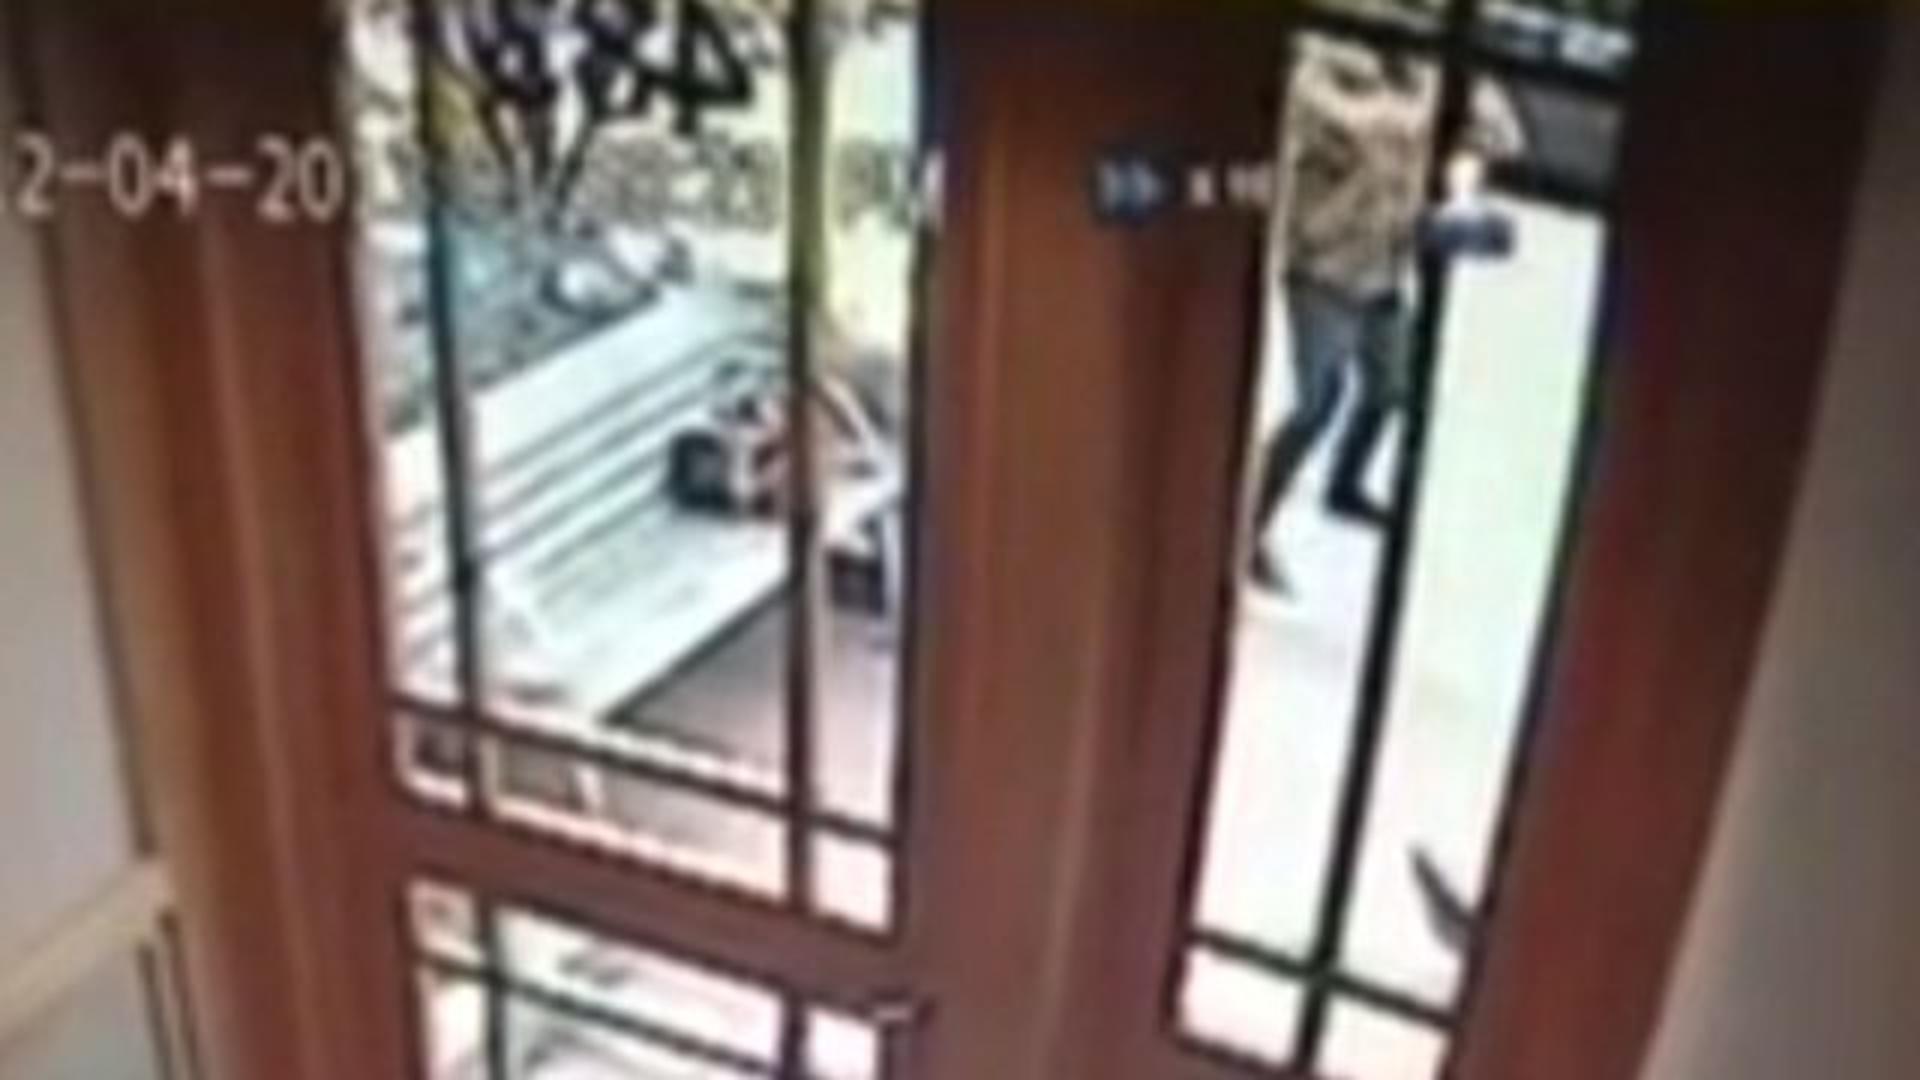 Twerking burglar caught on tape - CBS News